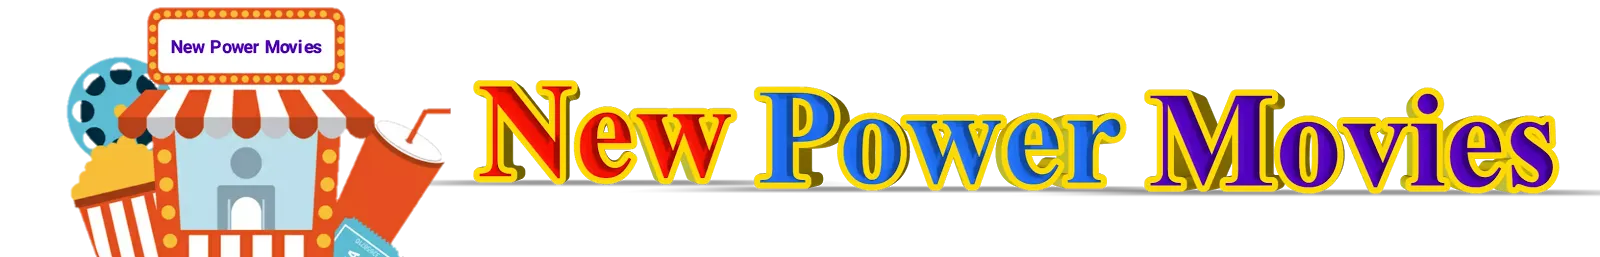 New Power Movies